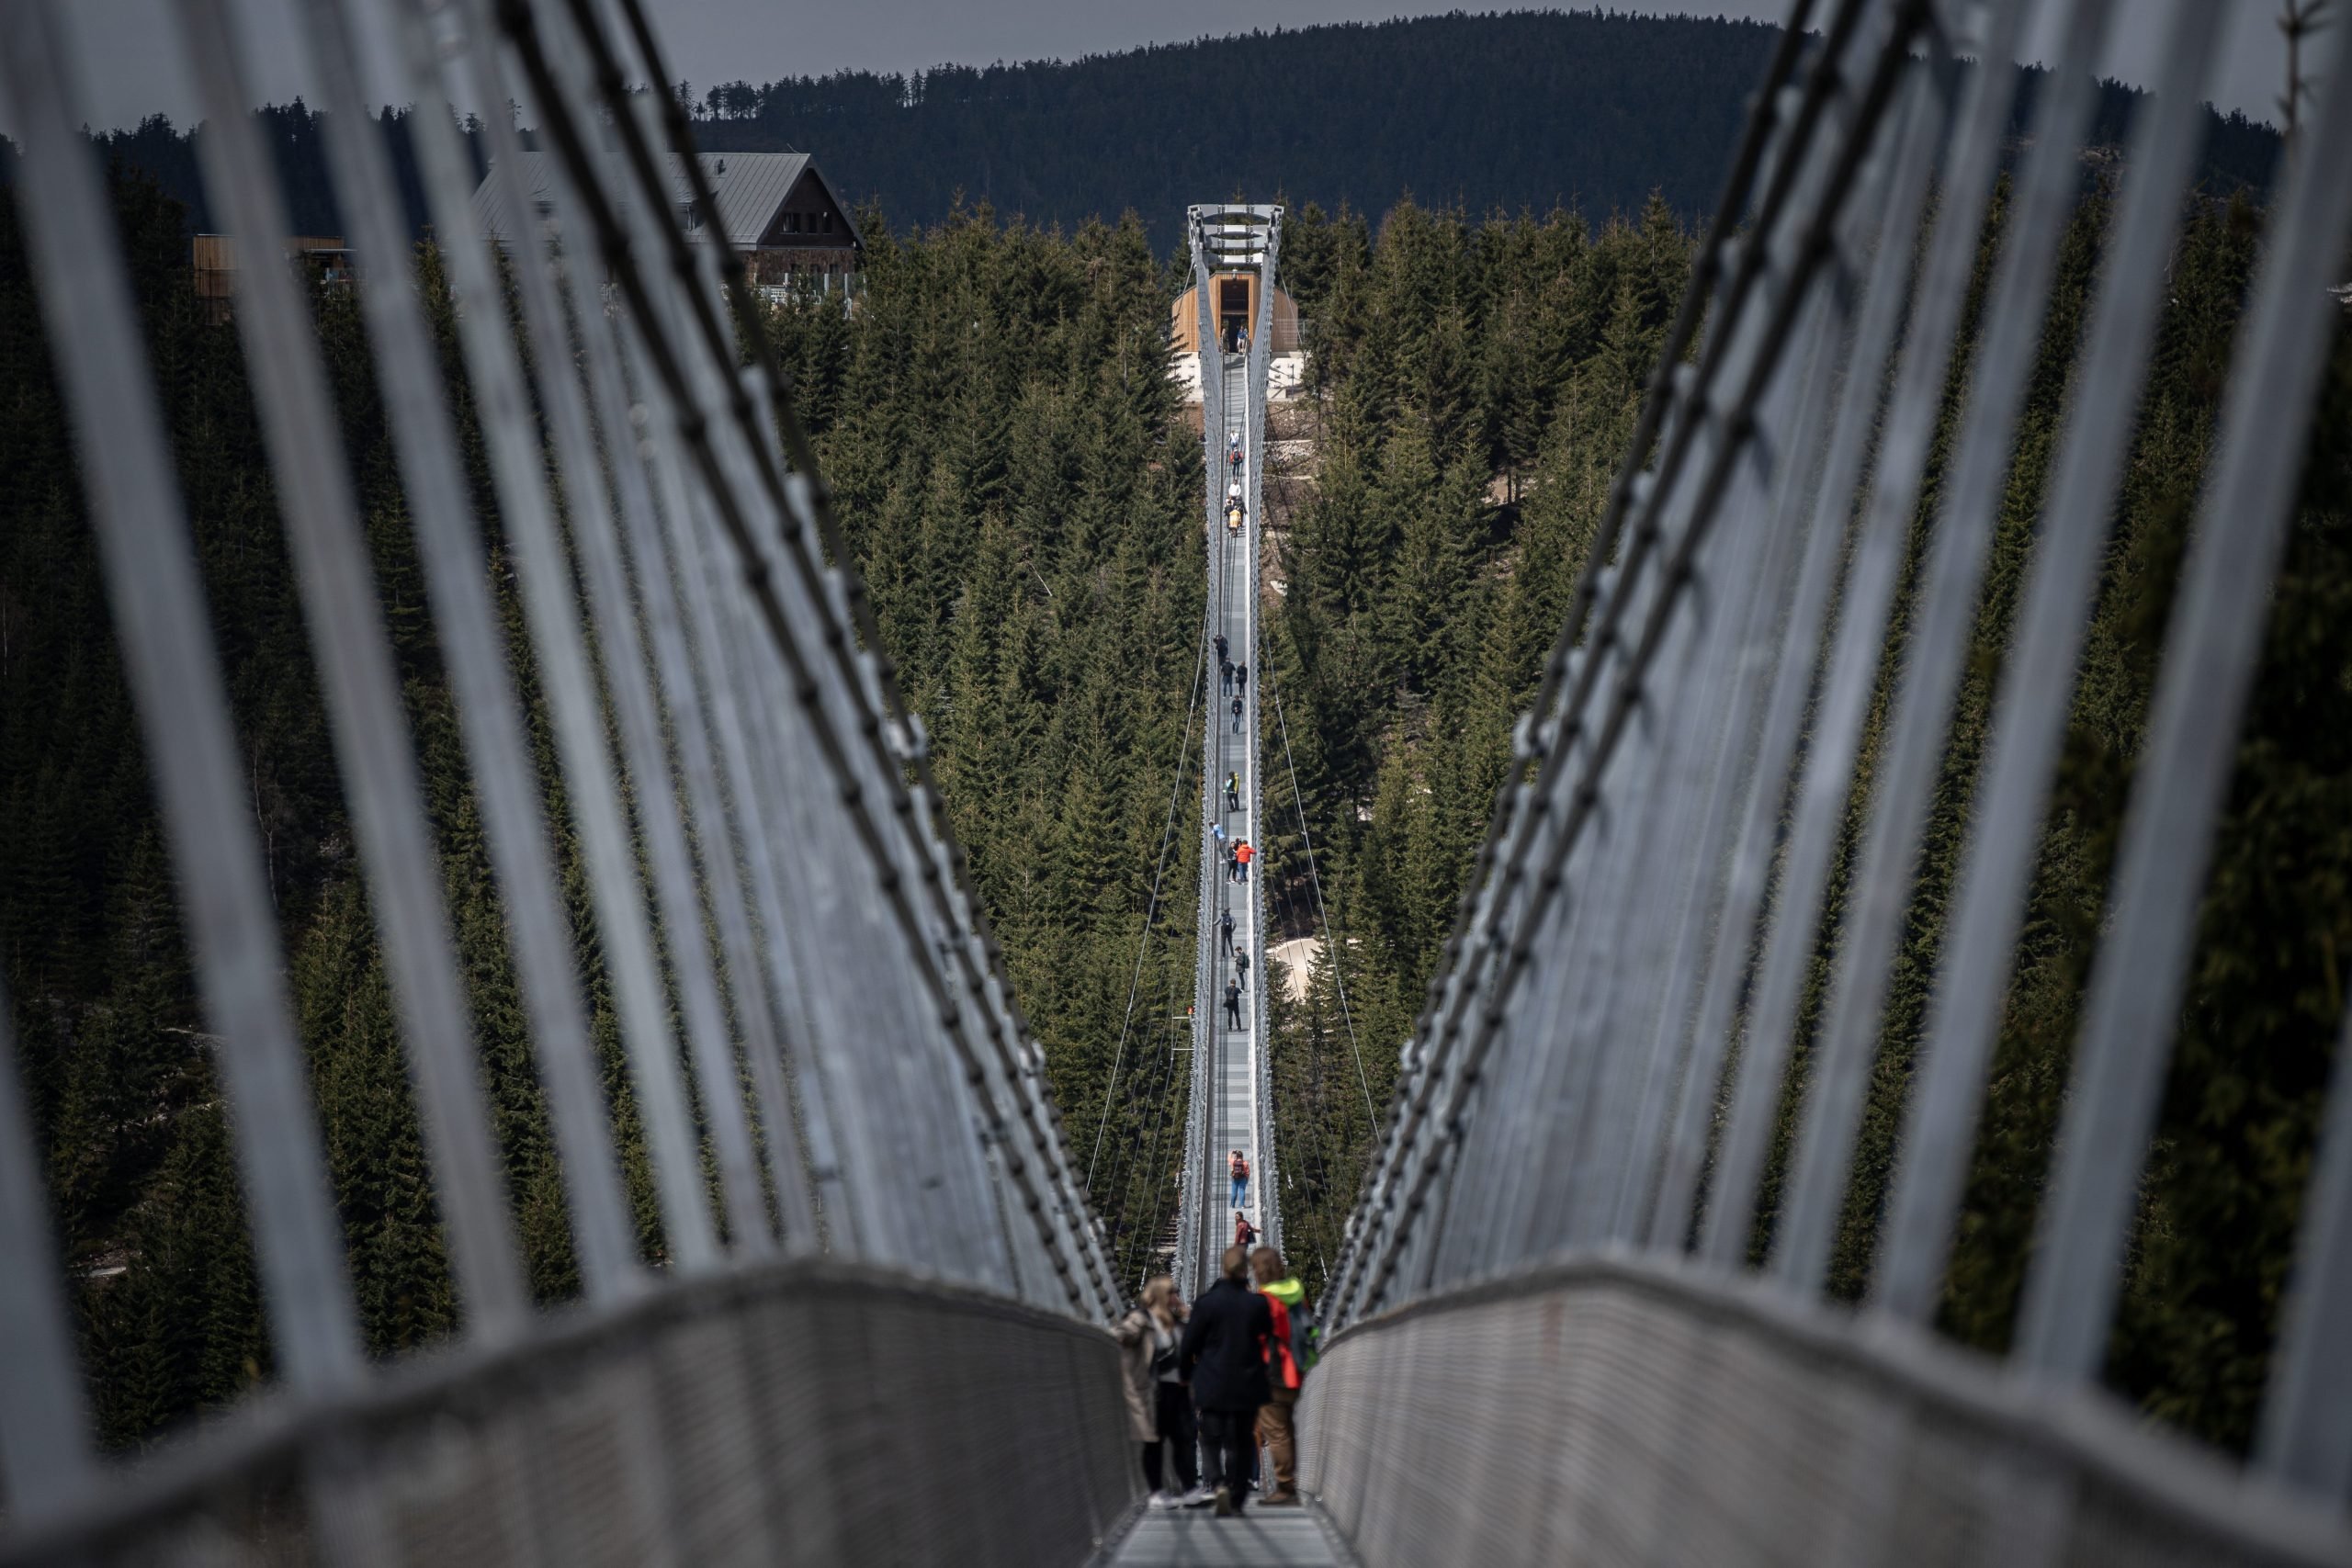 Sky Bridge 721 in the Czech Republic, the world's longest pedestrian suspension bridge